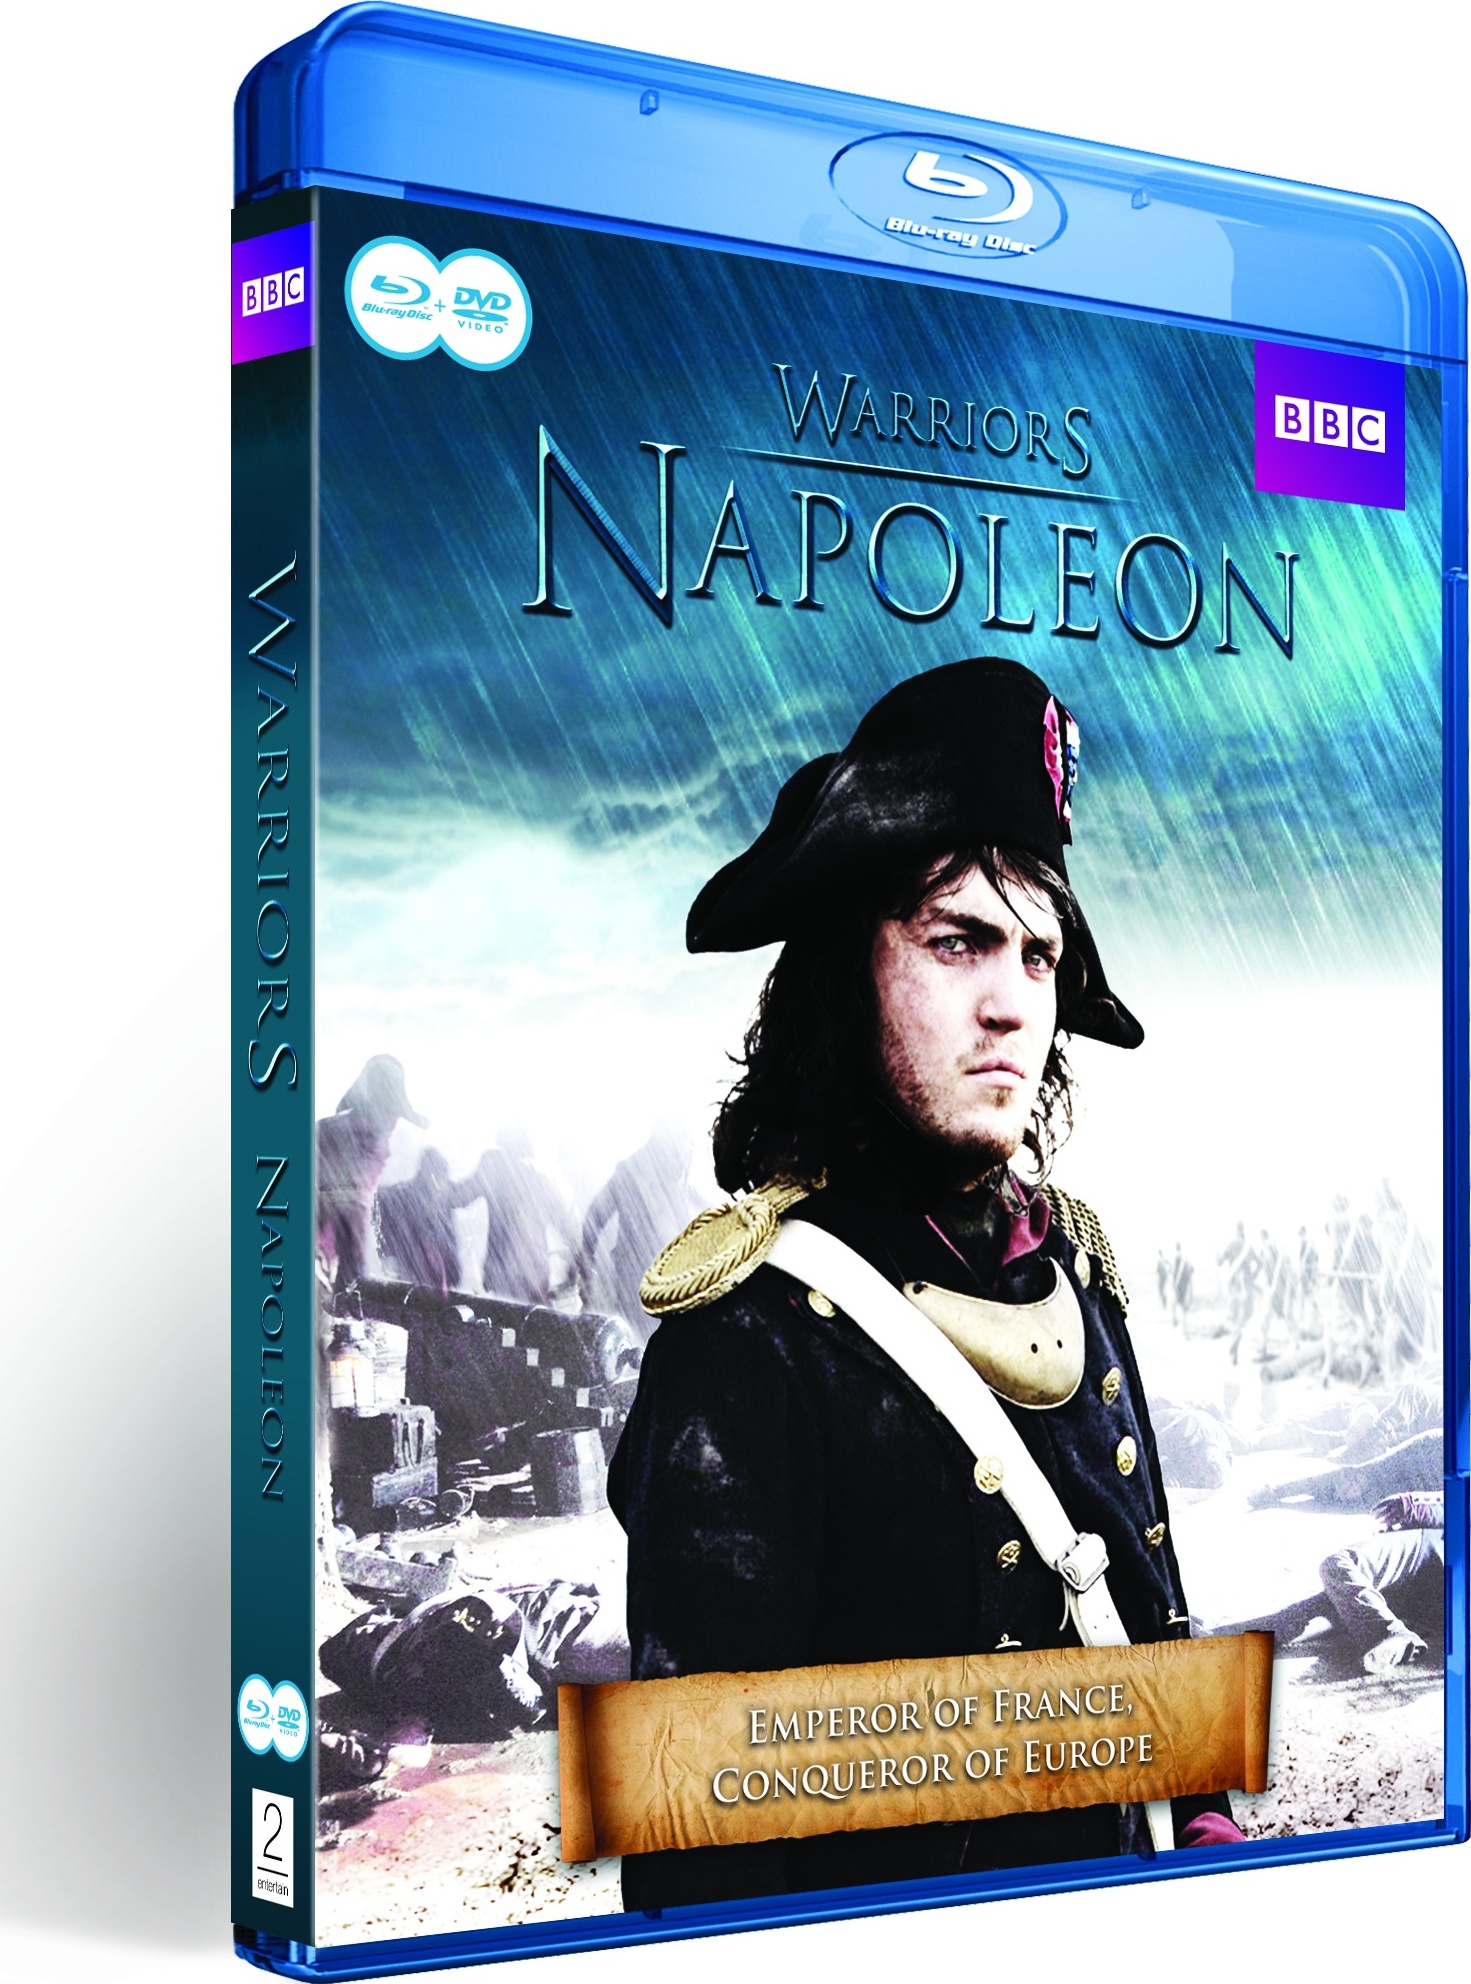 Heroes and Villains: Napoleon Blu-ray (Warriors: Napoleon) (Sweden)